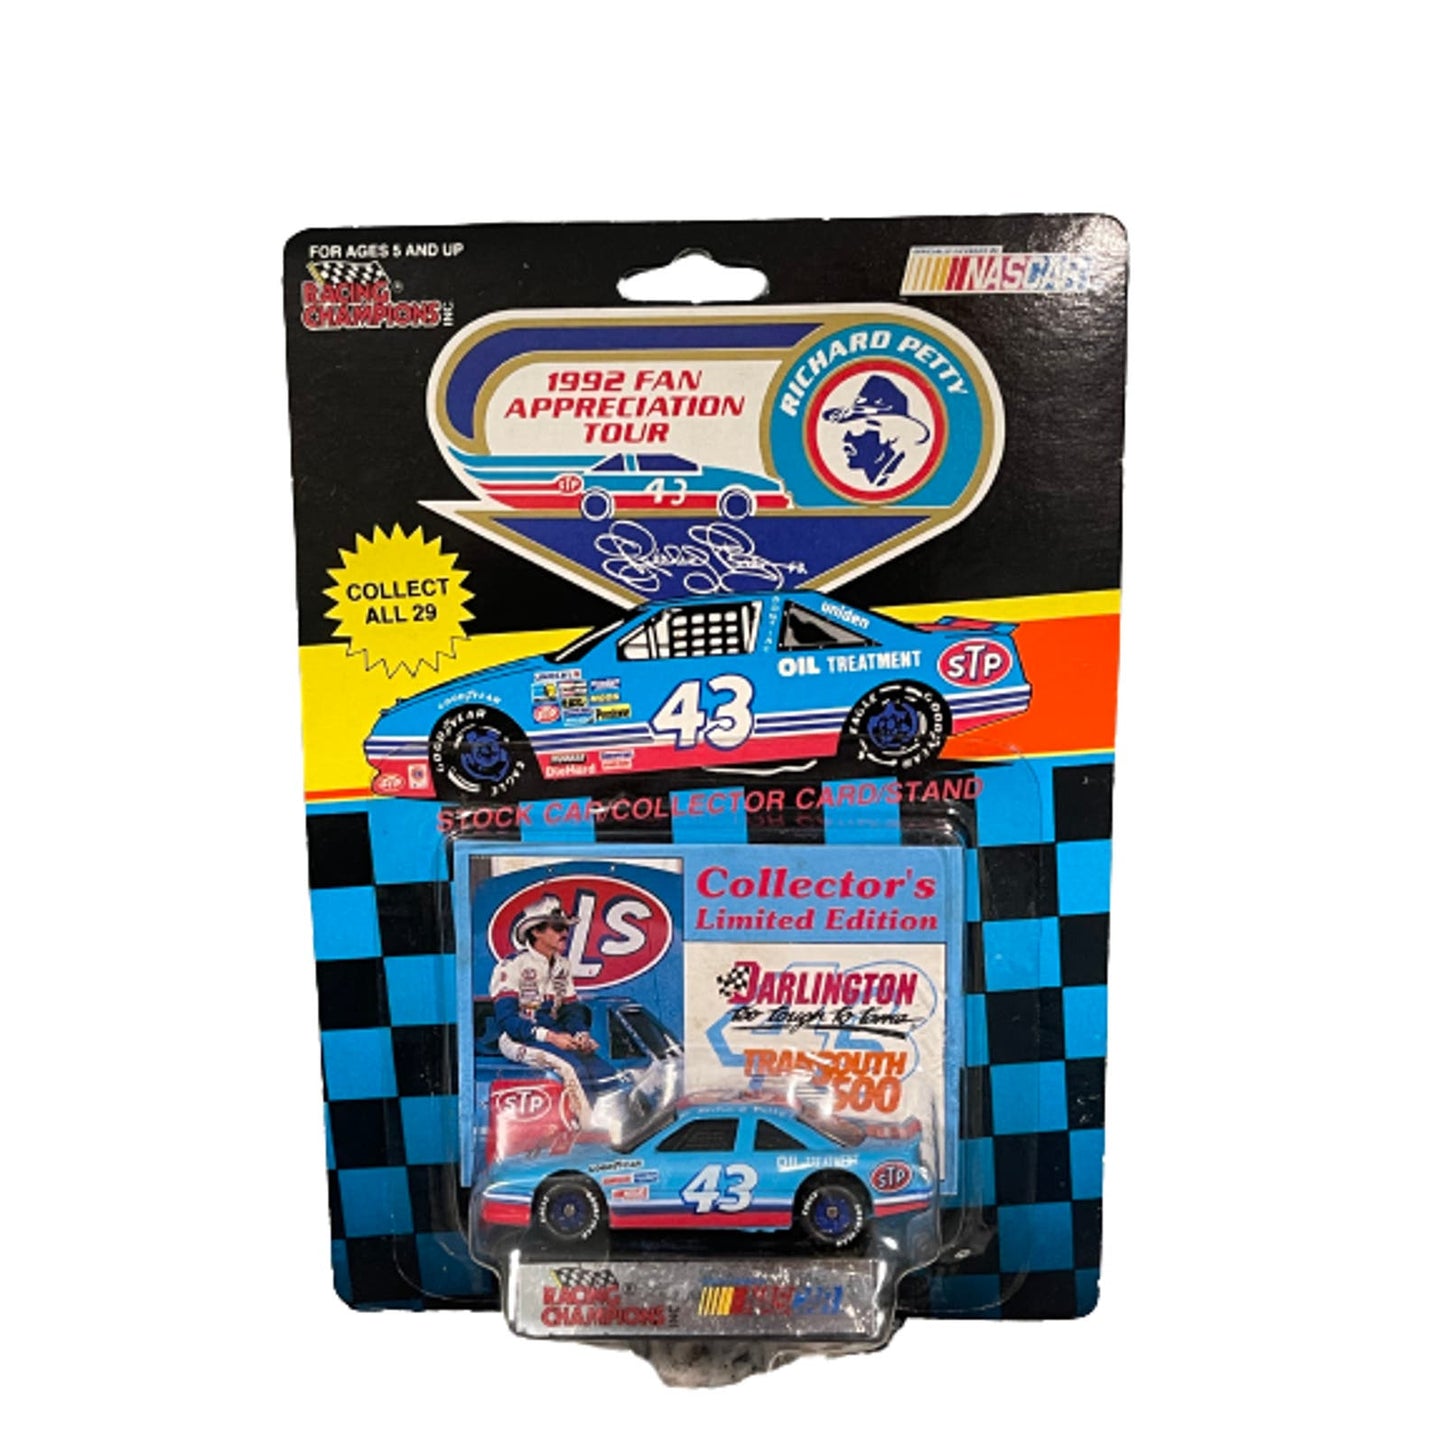 Richard Petty STP Fan Appreciation Tour Die-Cast NASCAR Car (1992)